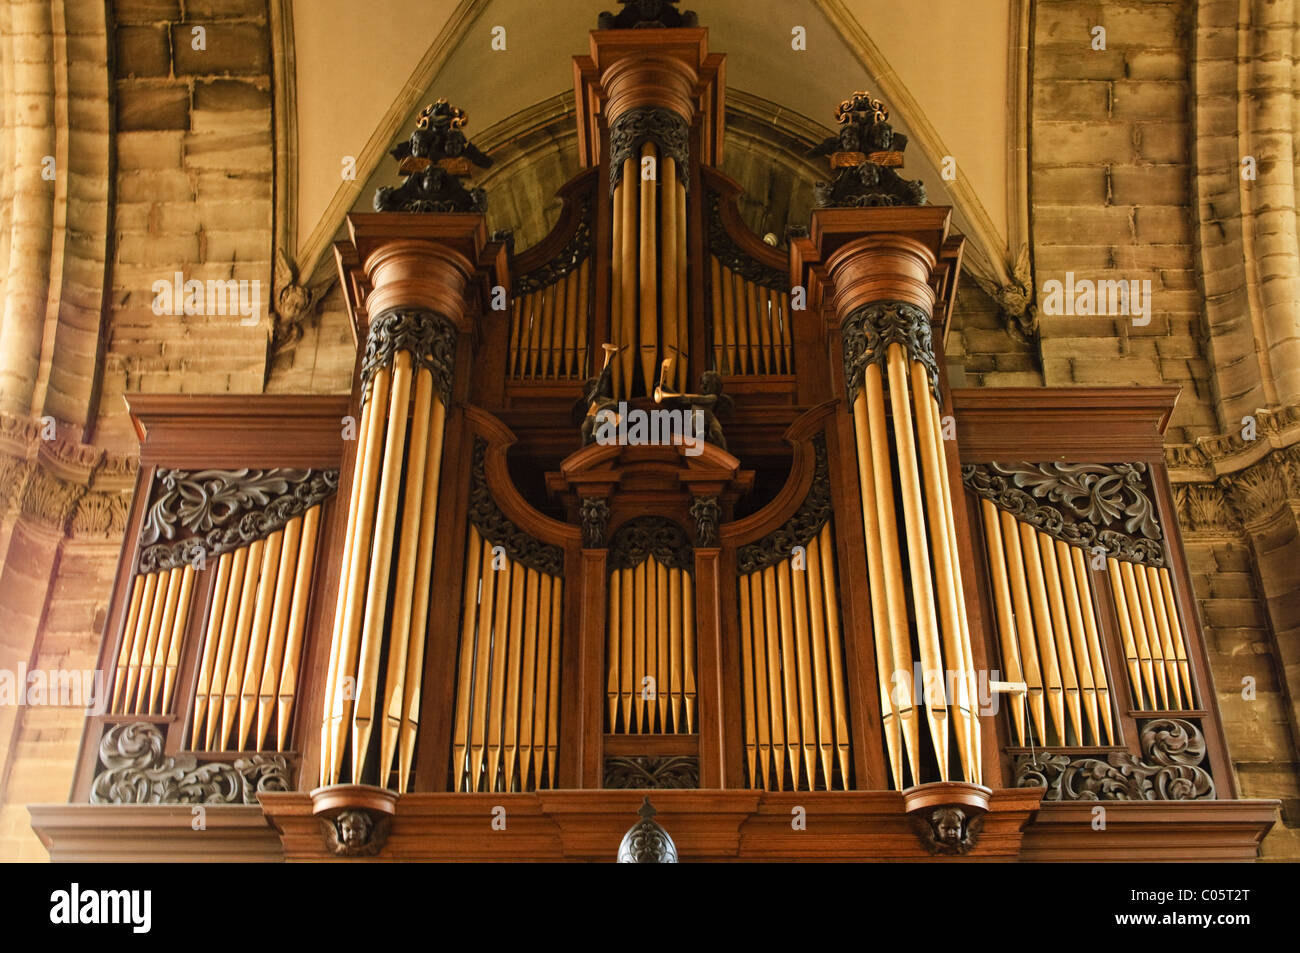 Organ pipes at St. Mary's Church, Warwick, Warwickshire, UK Stock Photo